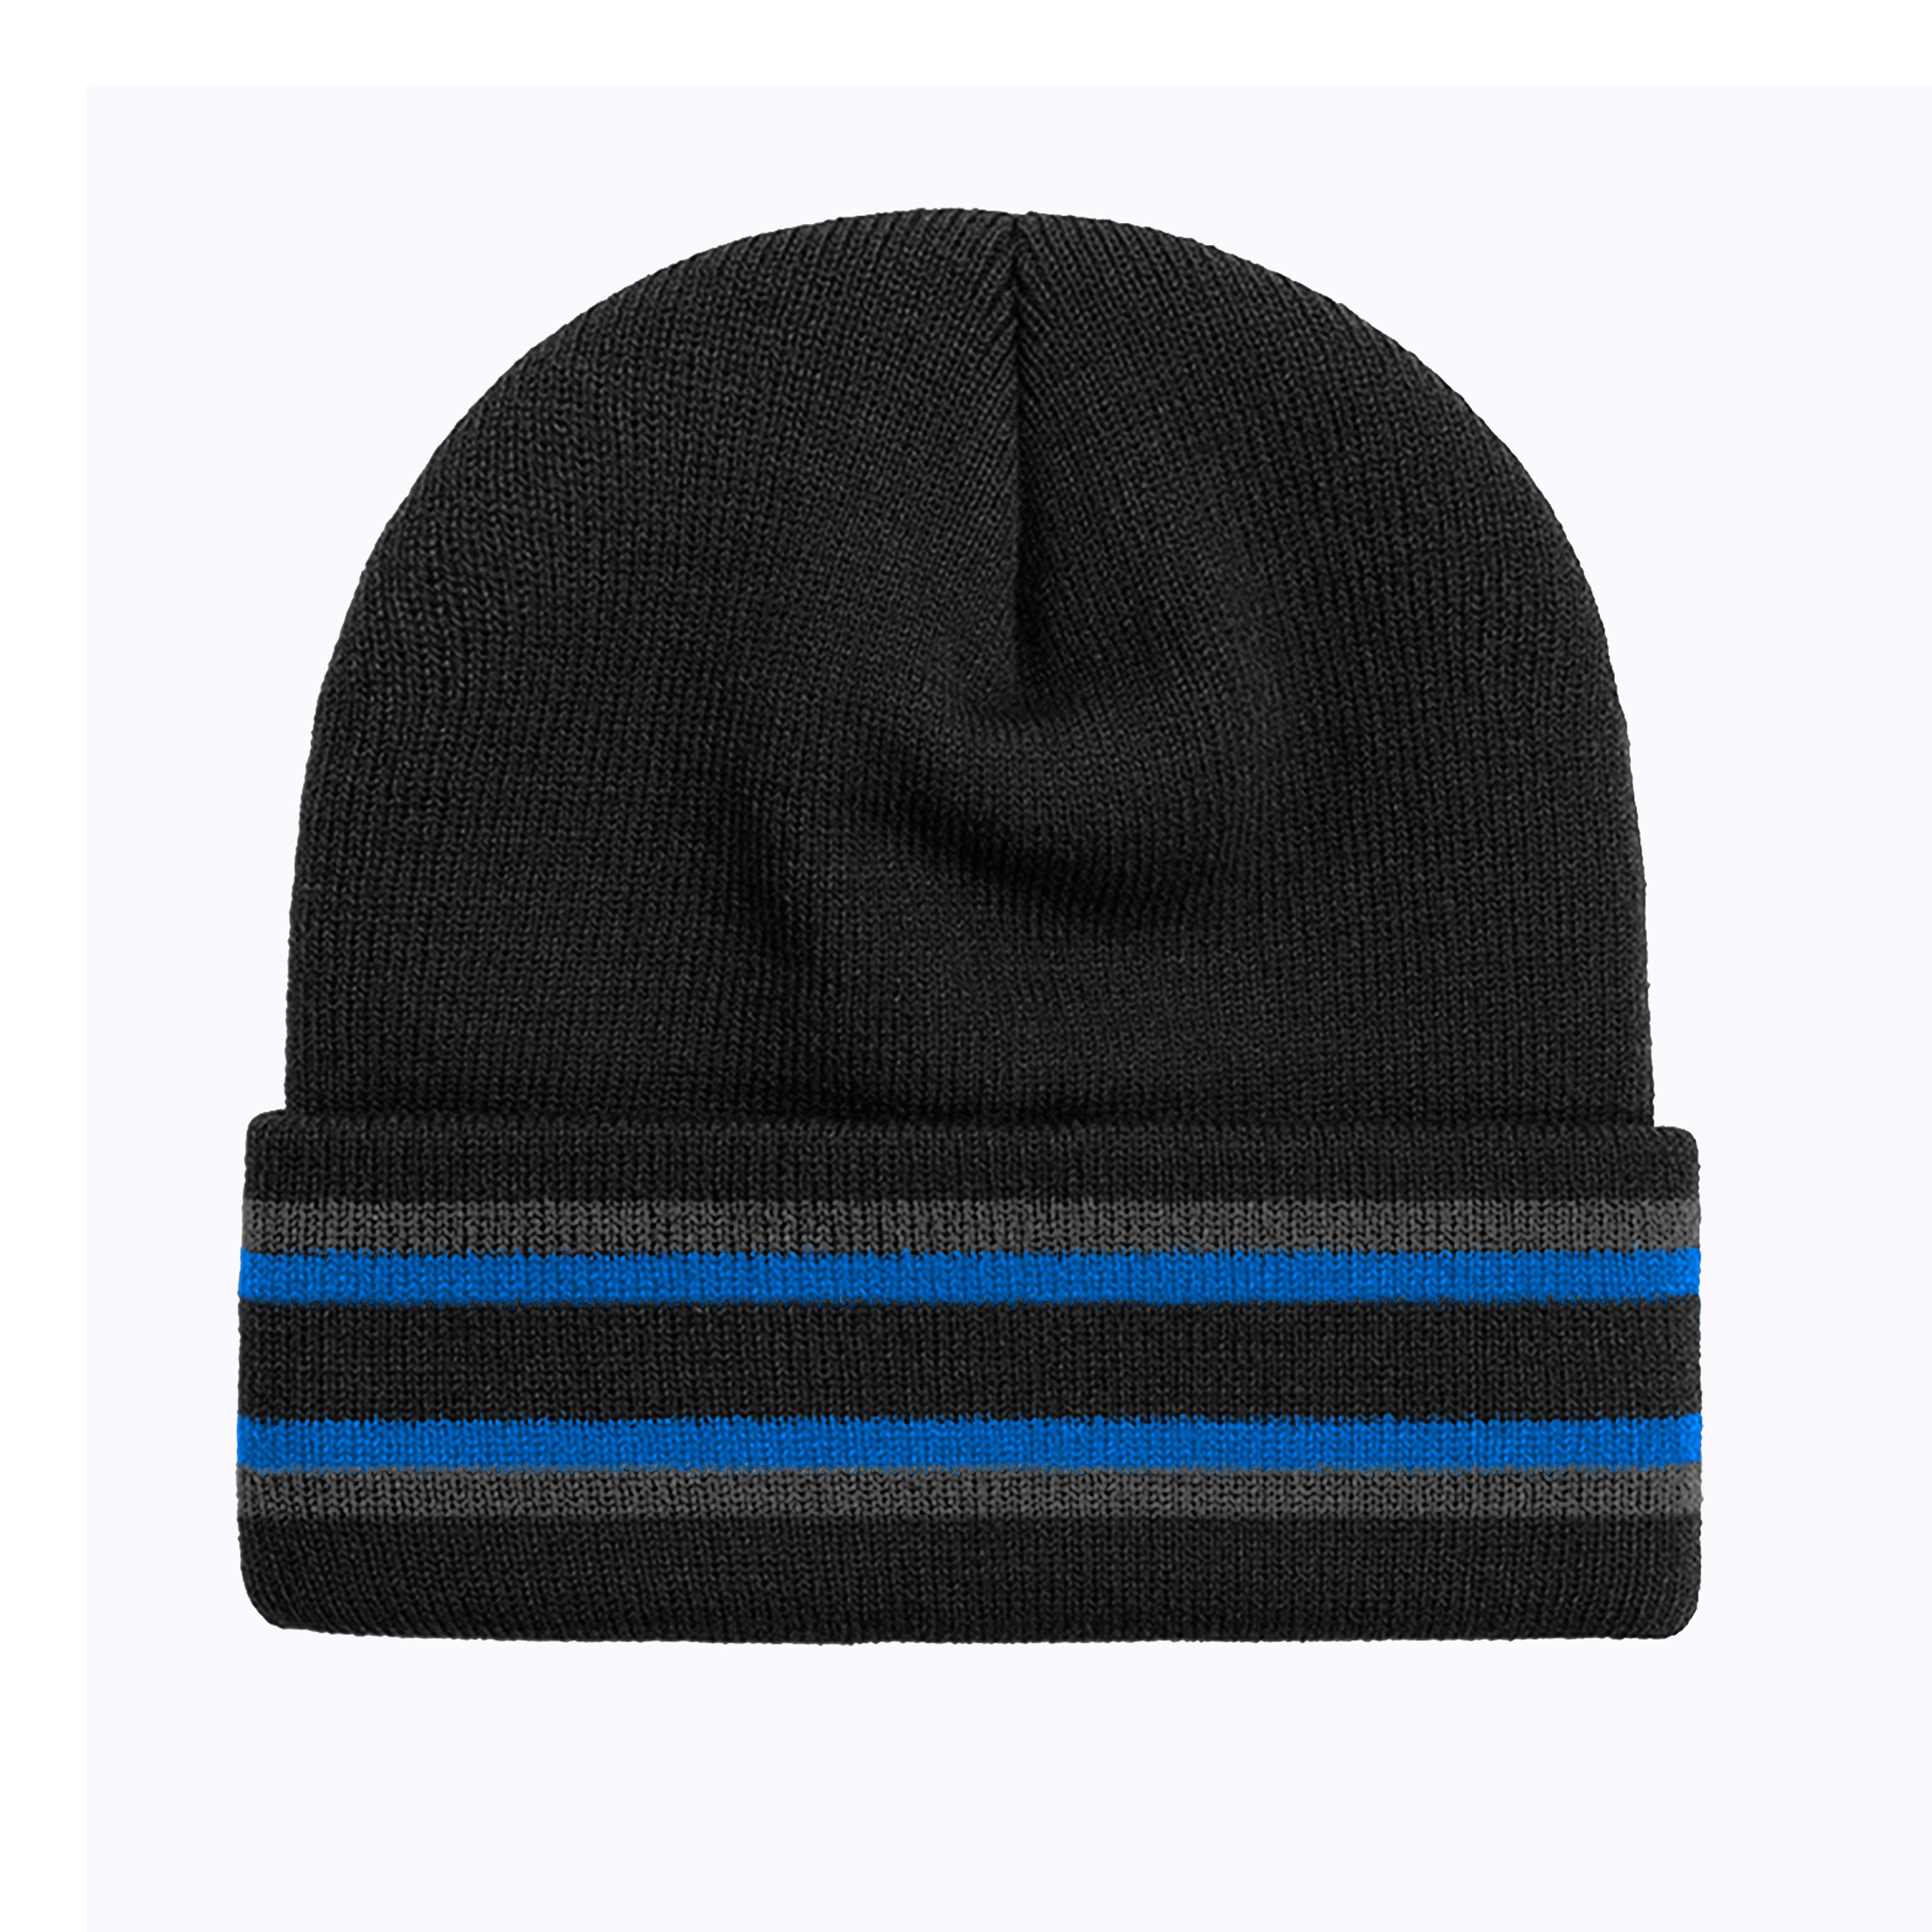 2-Pack: Men's Warm Knit Cuffed Cap Beanie Hat W/ Faux Fur Lining - Solid & Stripe